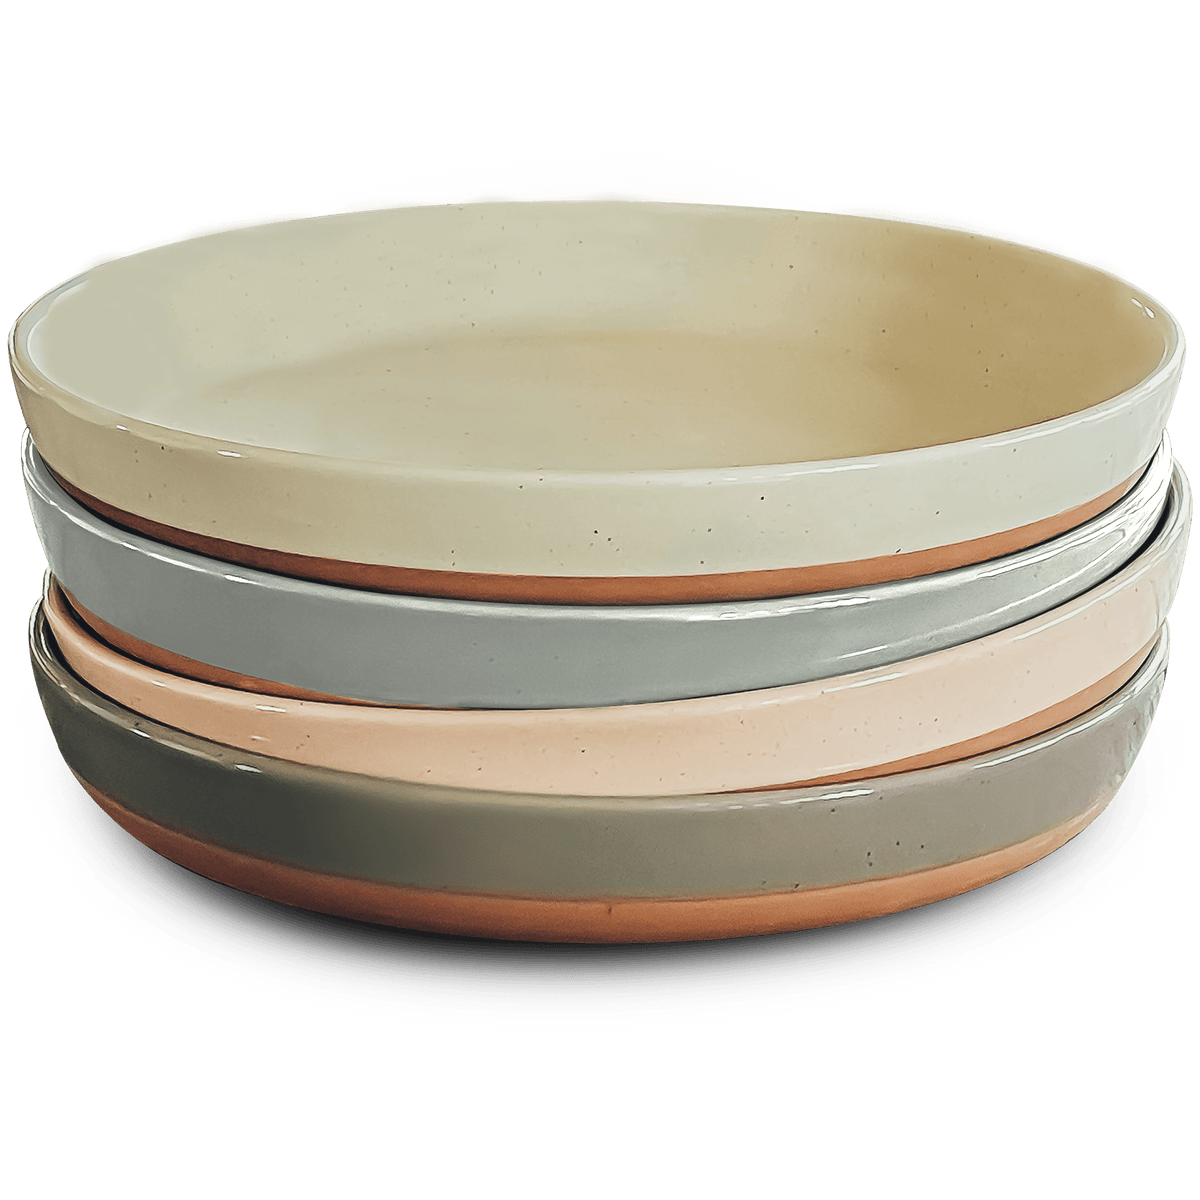 MORA CERAMICS HIT PAUSE Mora Ceramic Large Pasta Bowls 30oz, Set